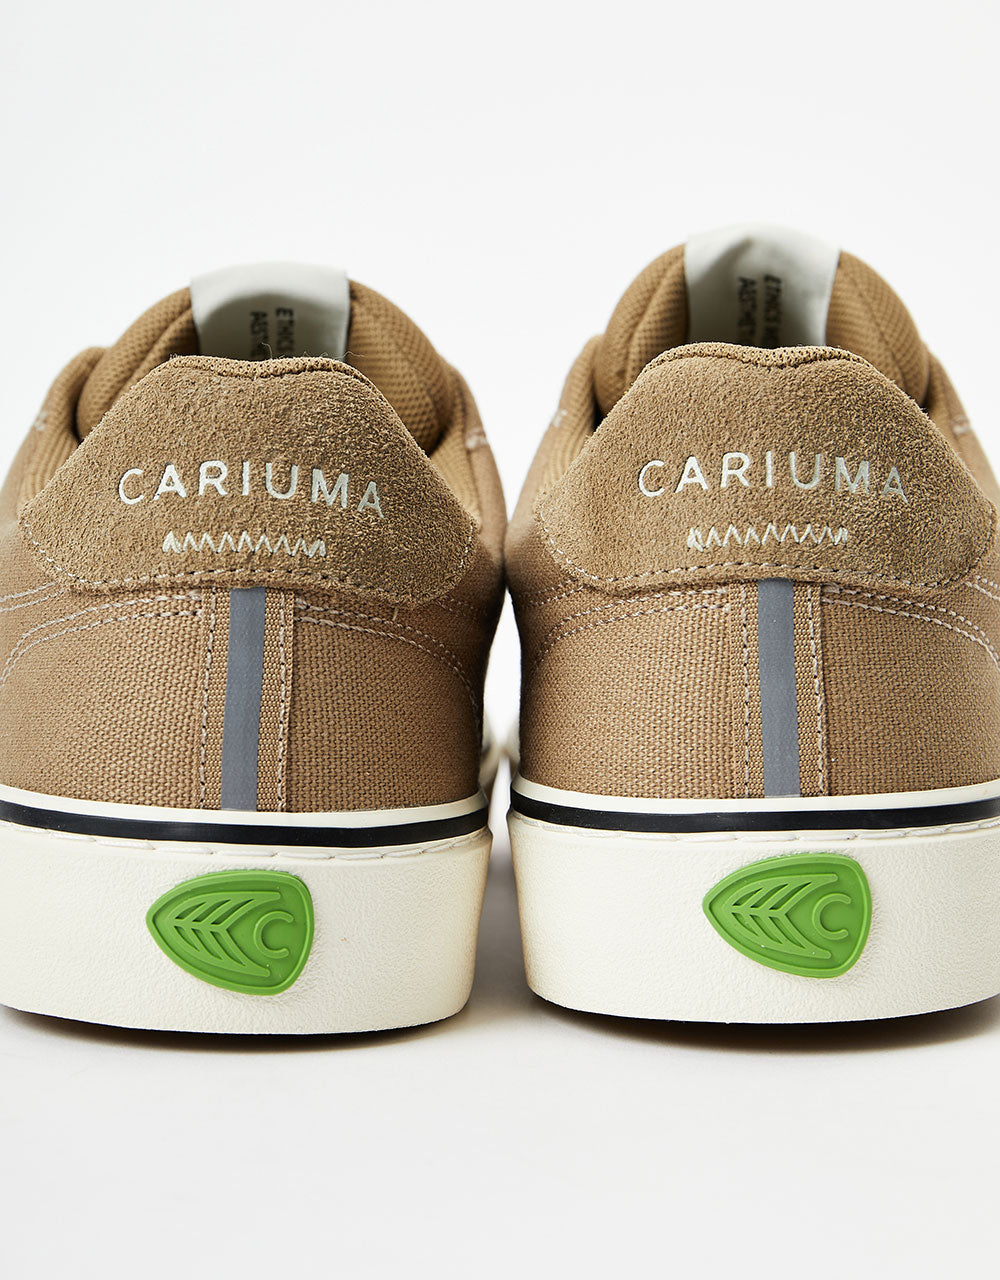 Cariuma Naioca Skate Shoes - Burnt Sand/Ivory